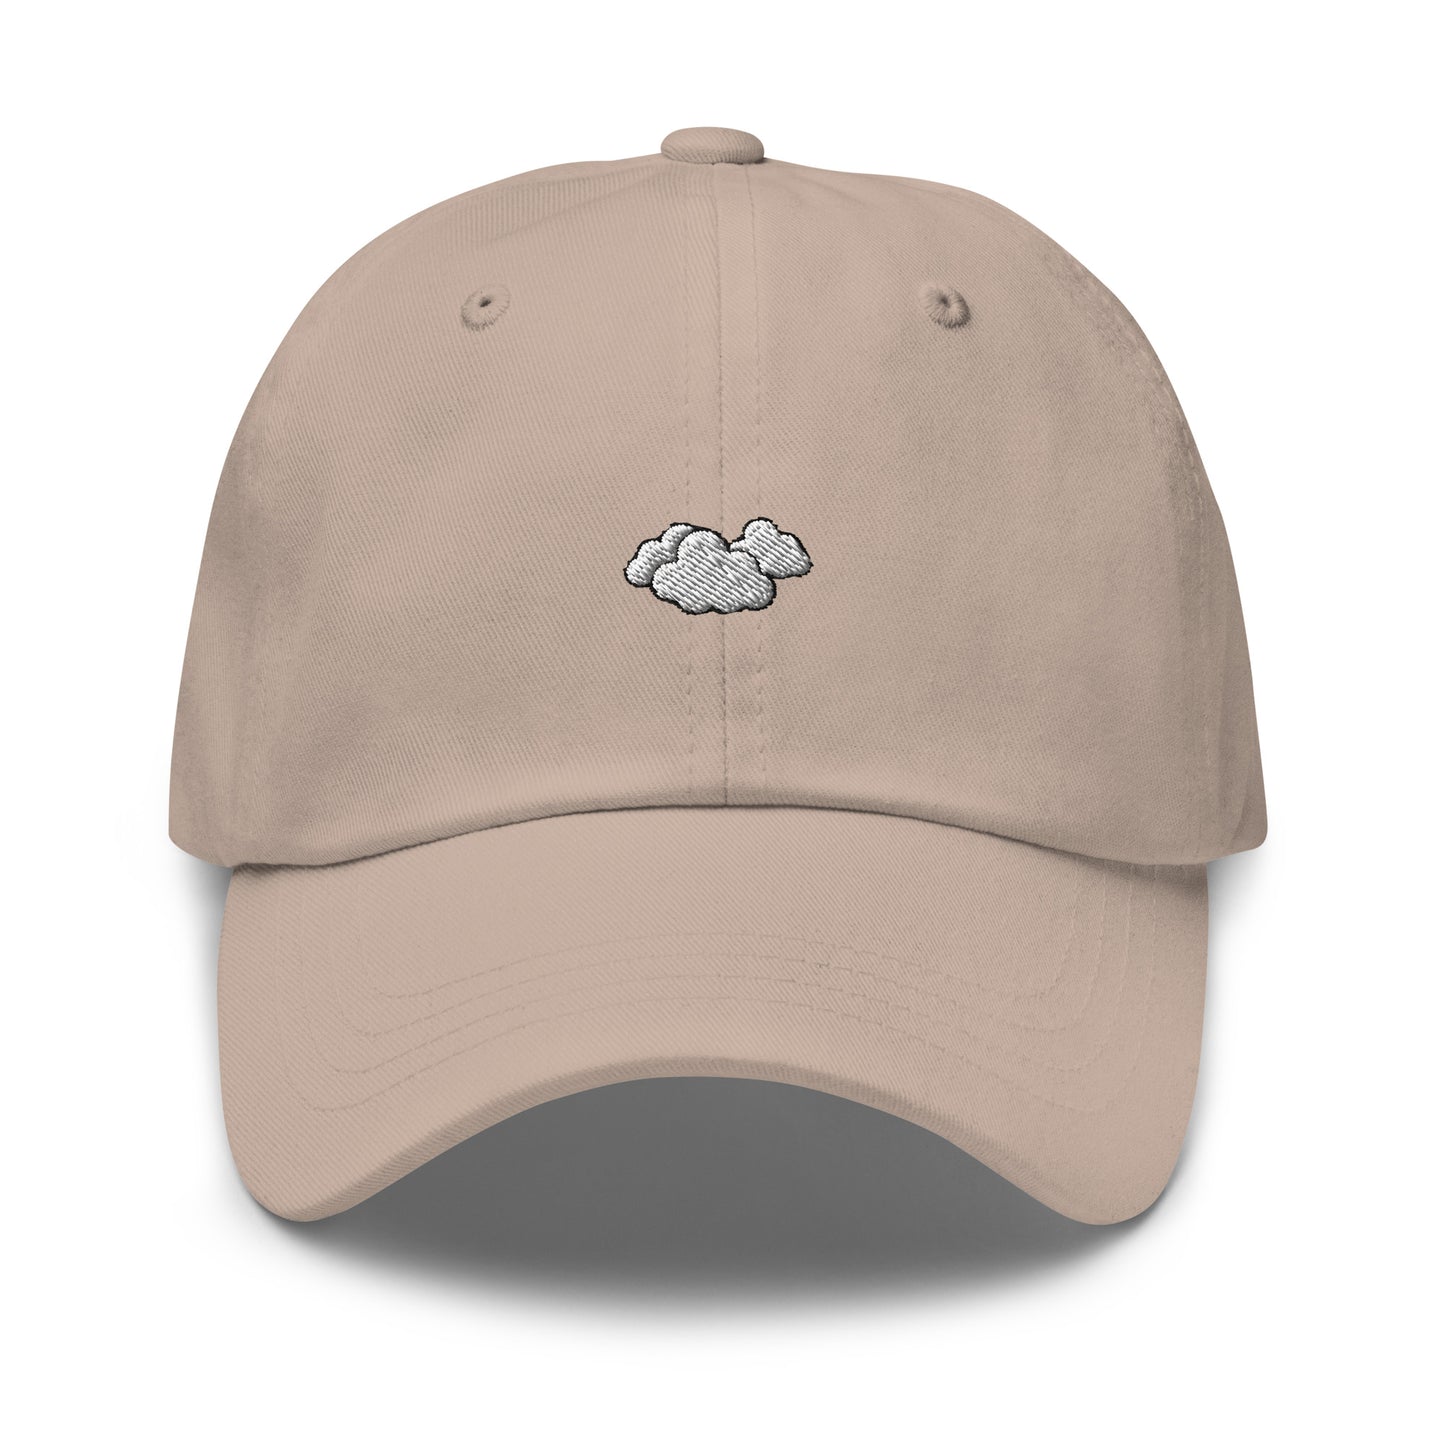 Dad Cap with Cloud Symbol